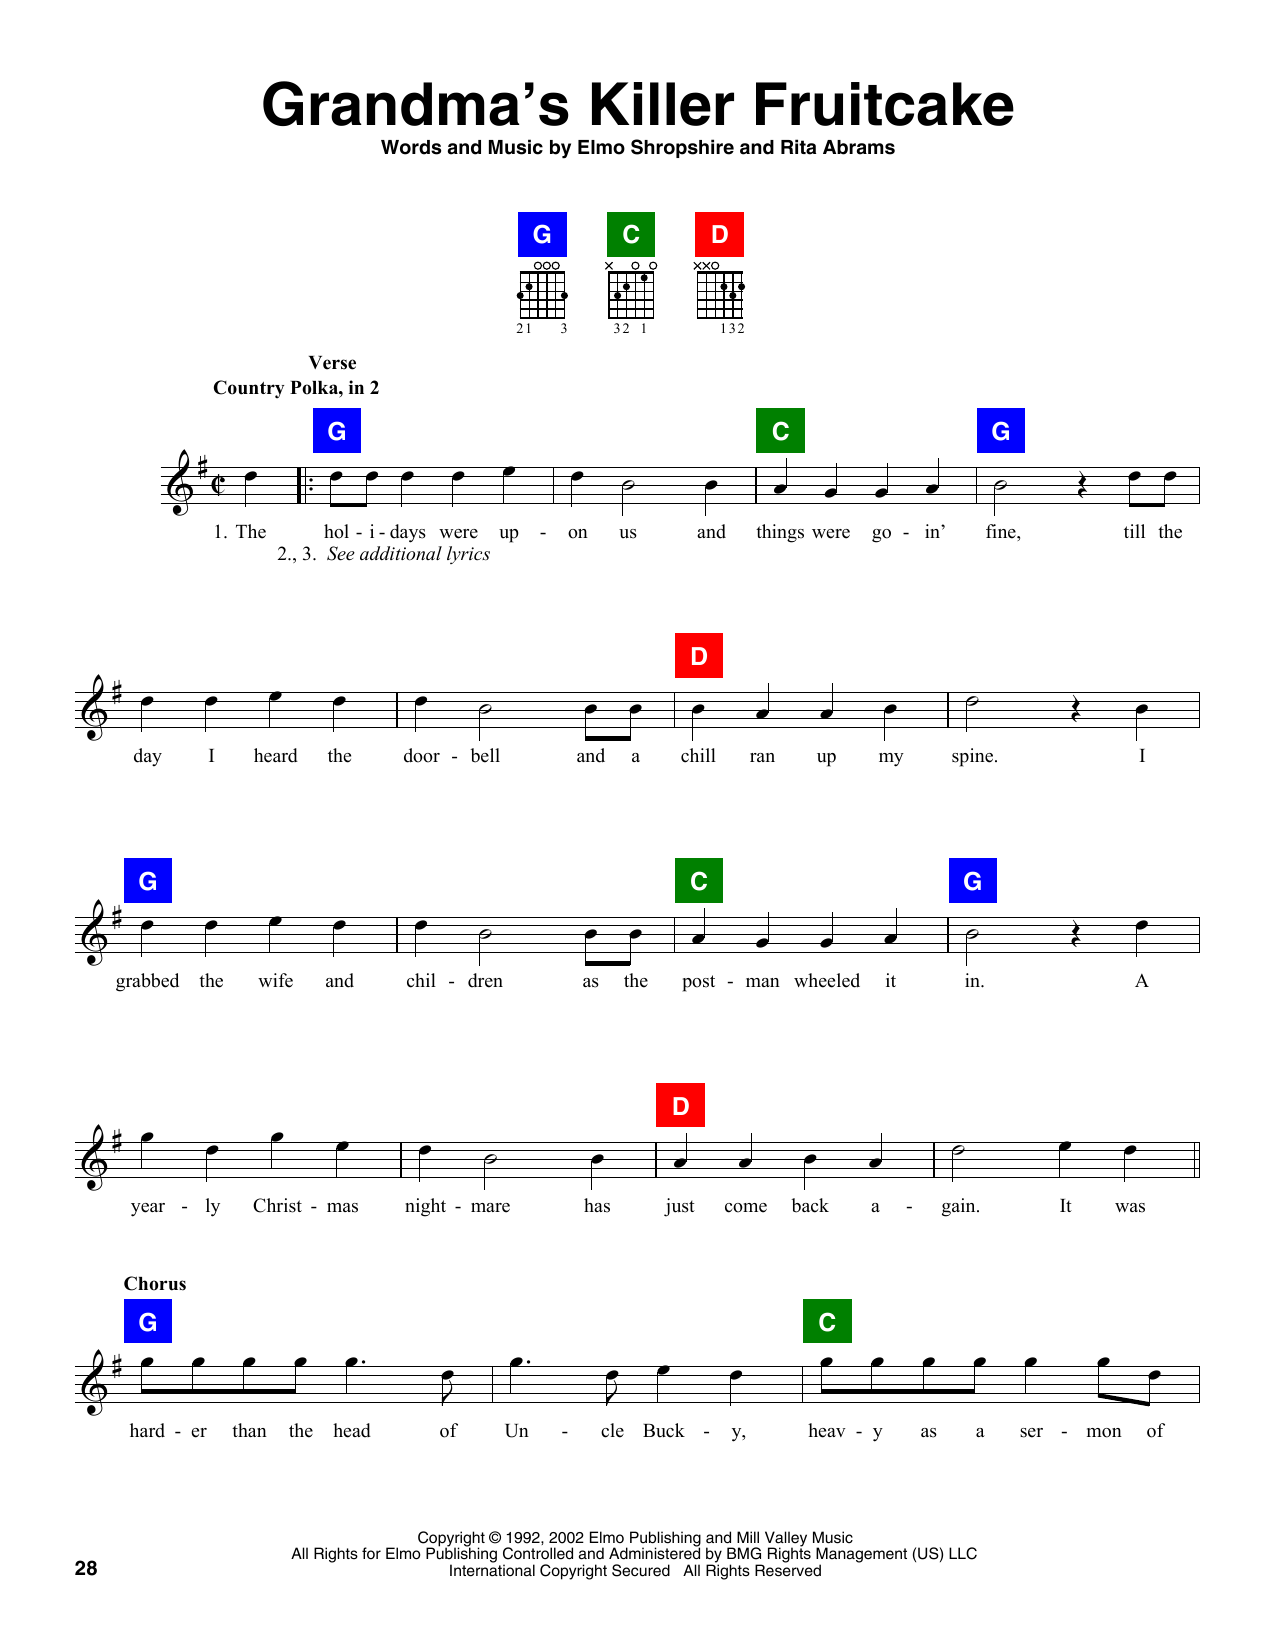 Elmo Shropshire Grandma's Killer Fruitcake Sheet Music Notes & Chords for Easy Guitar - Download or Print PDF